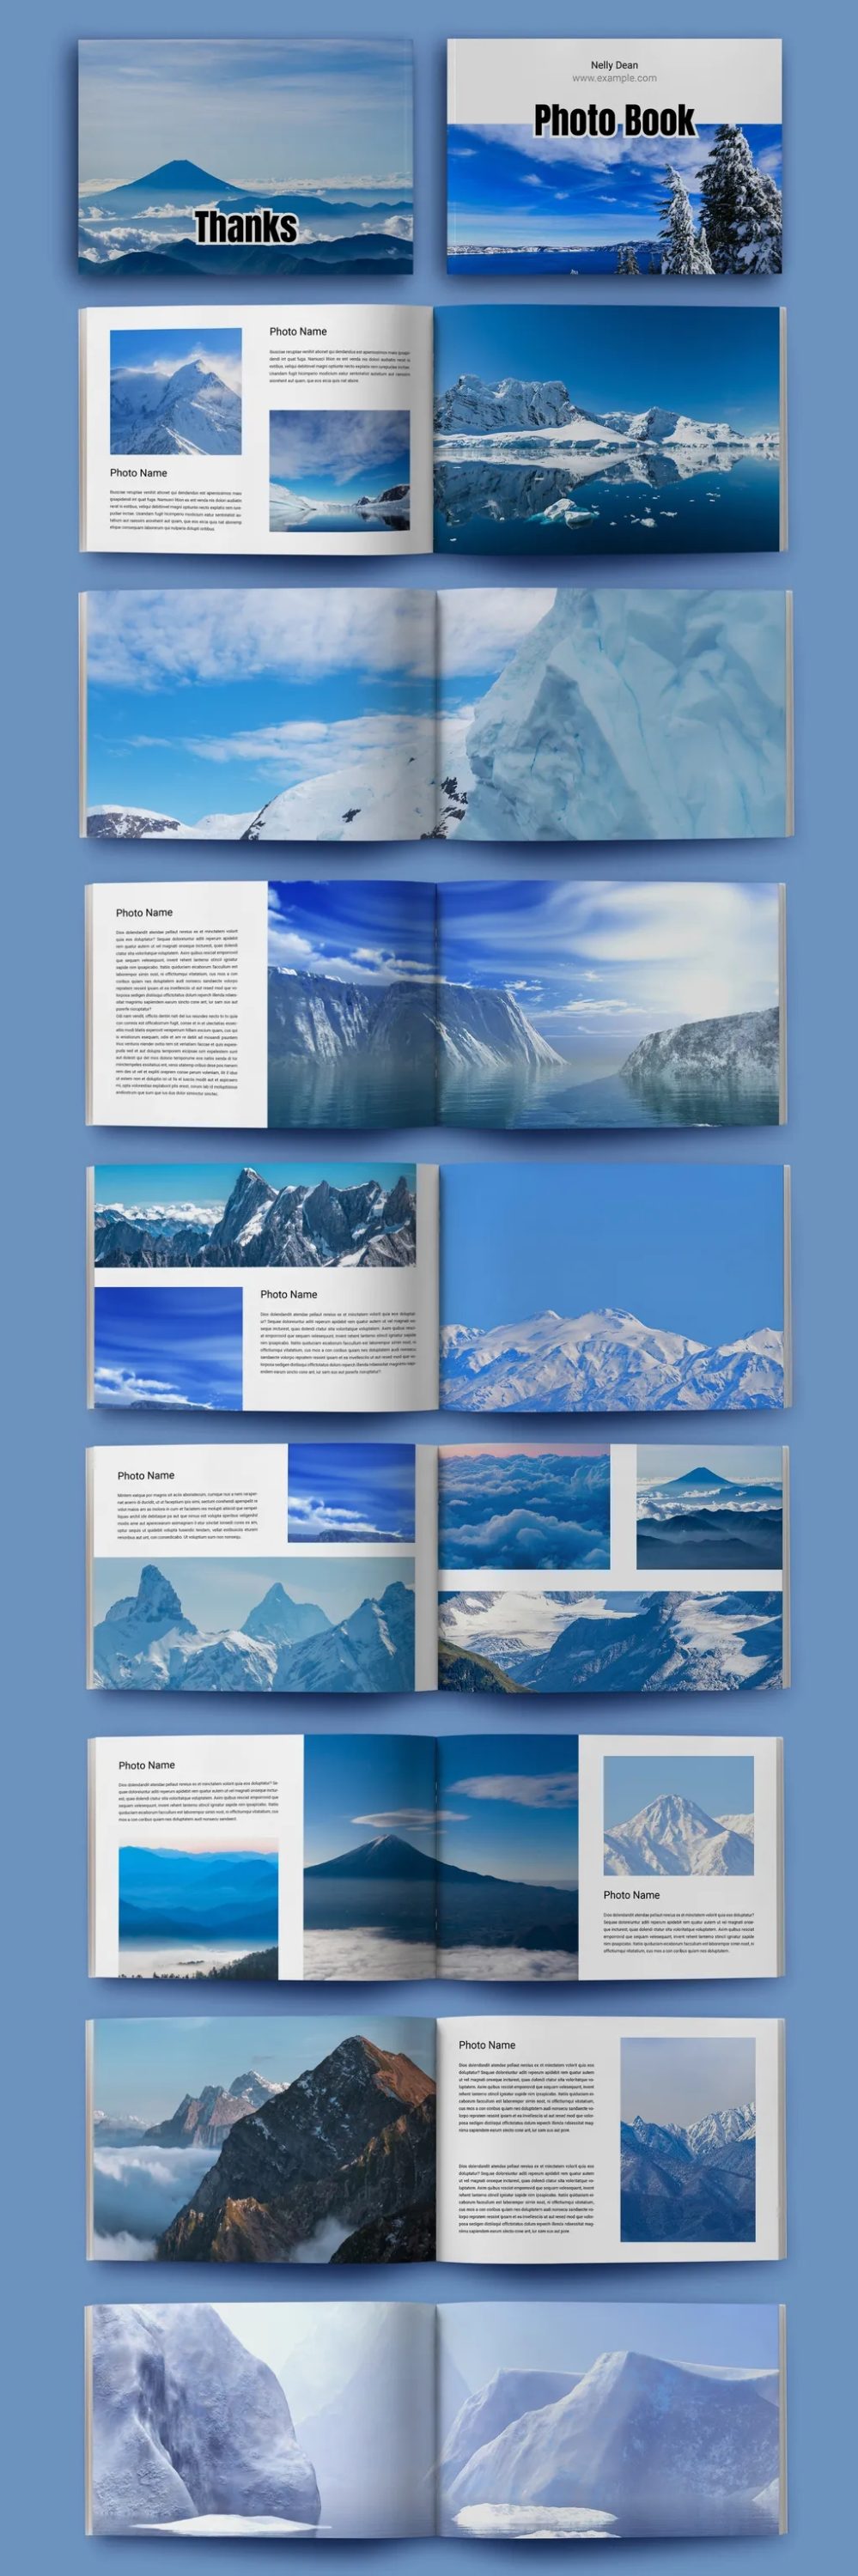 Adobestock - Photo Book Template Layout 723806188